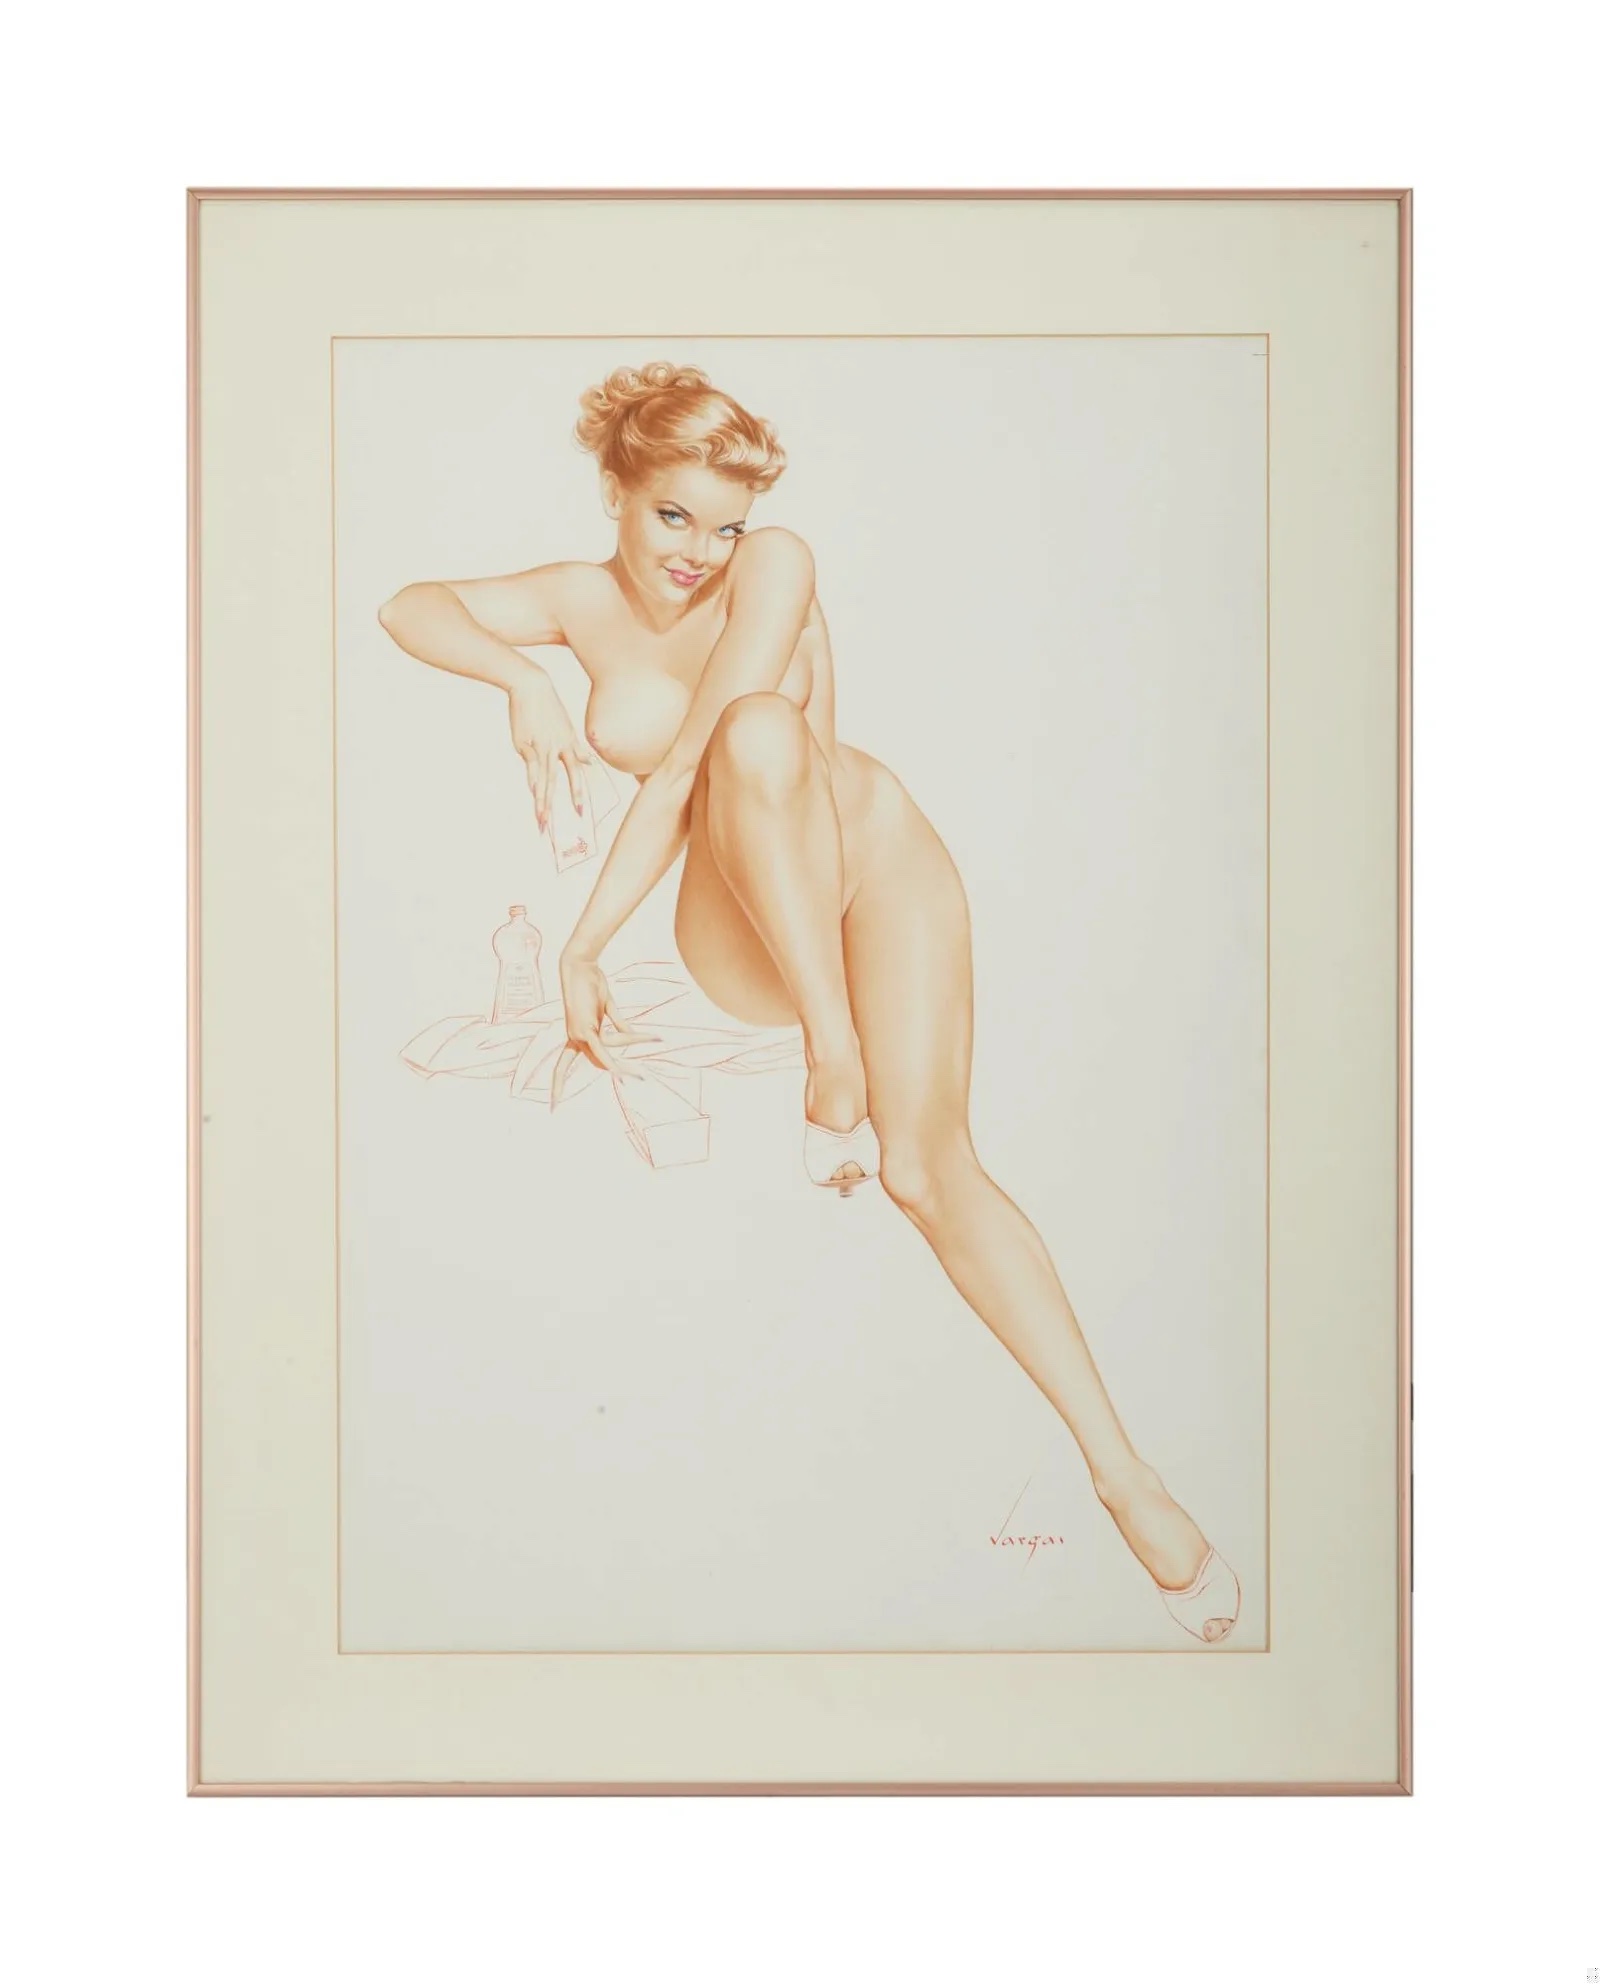 Alberto Vargas, Playboy October 1960 watercolor drawing, estimated at $30,000-$40,000 at Julien's.